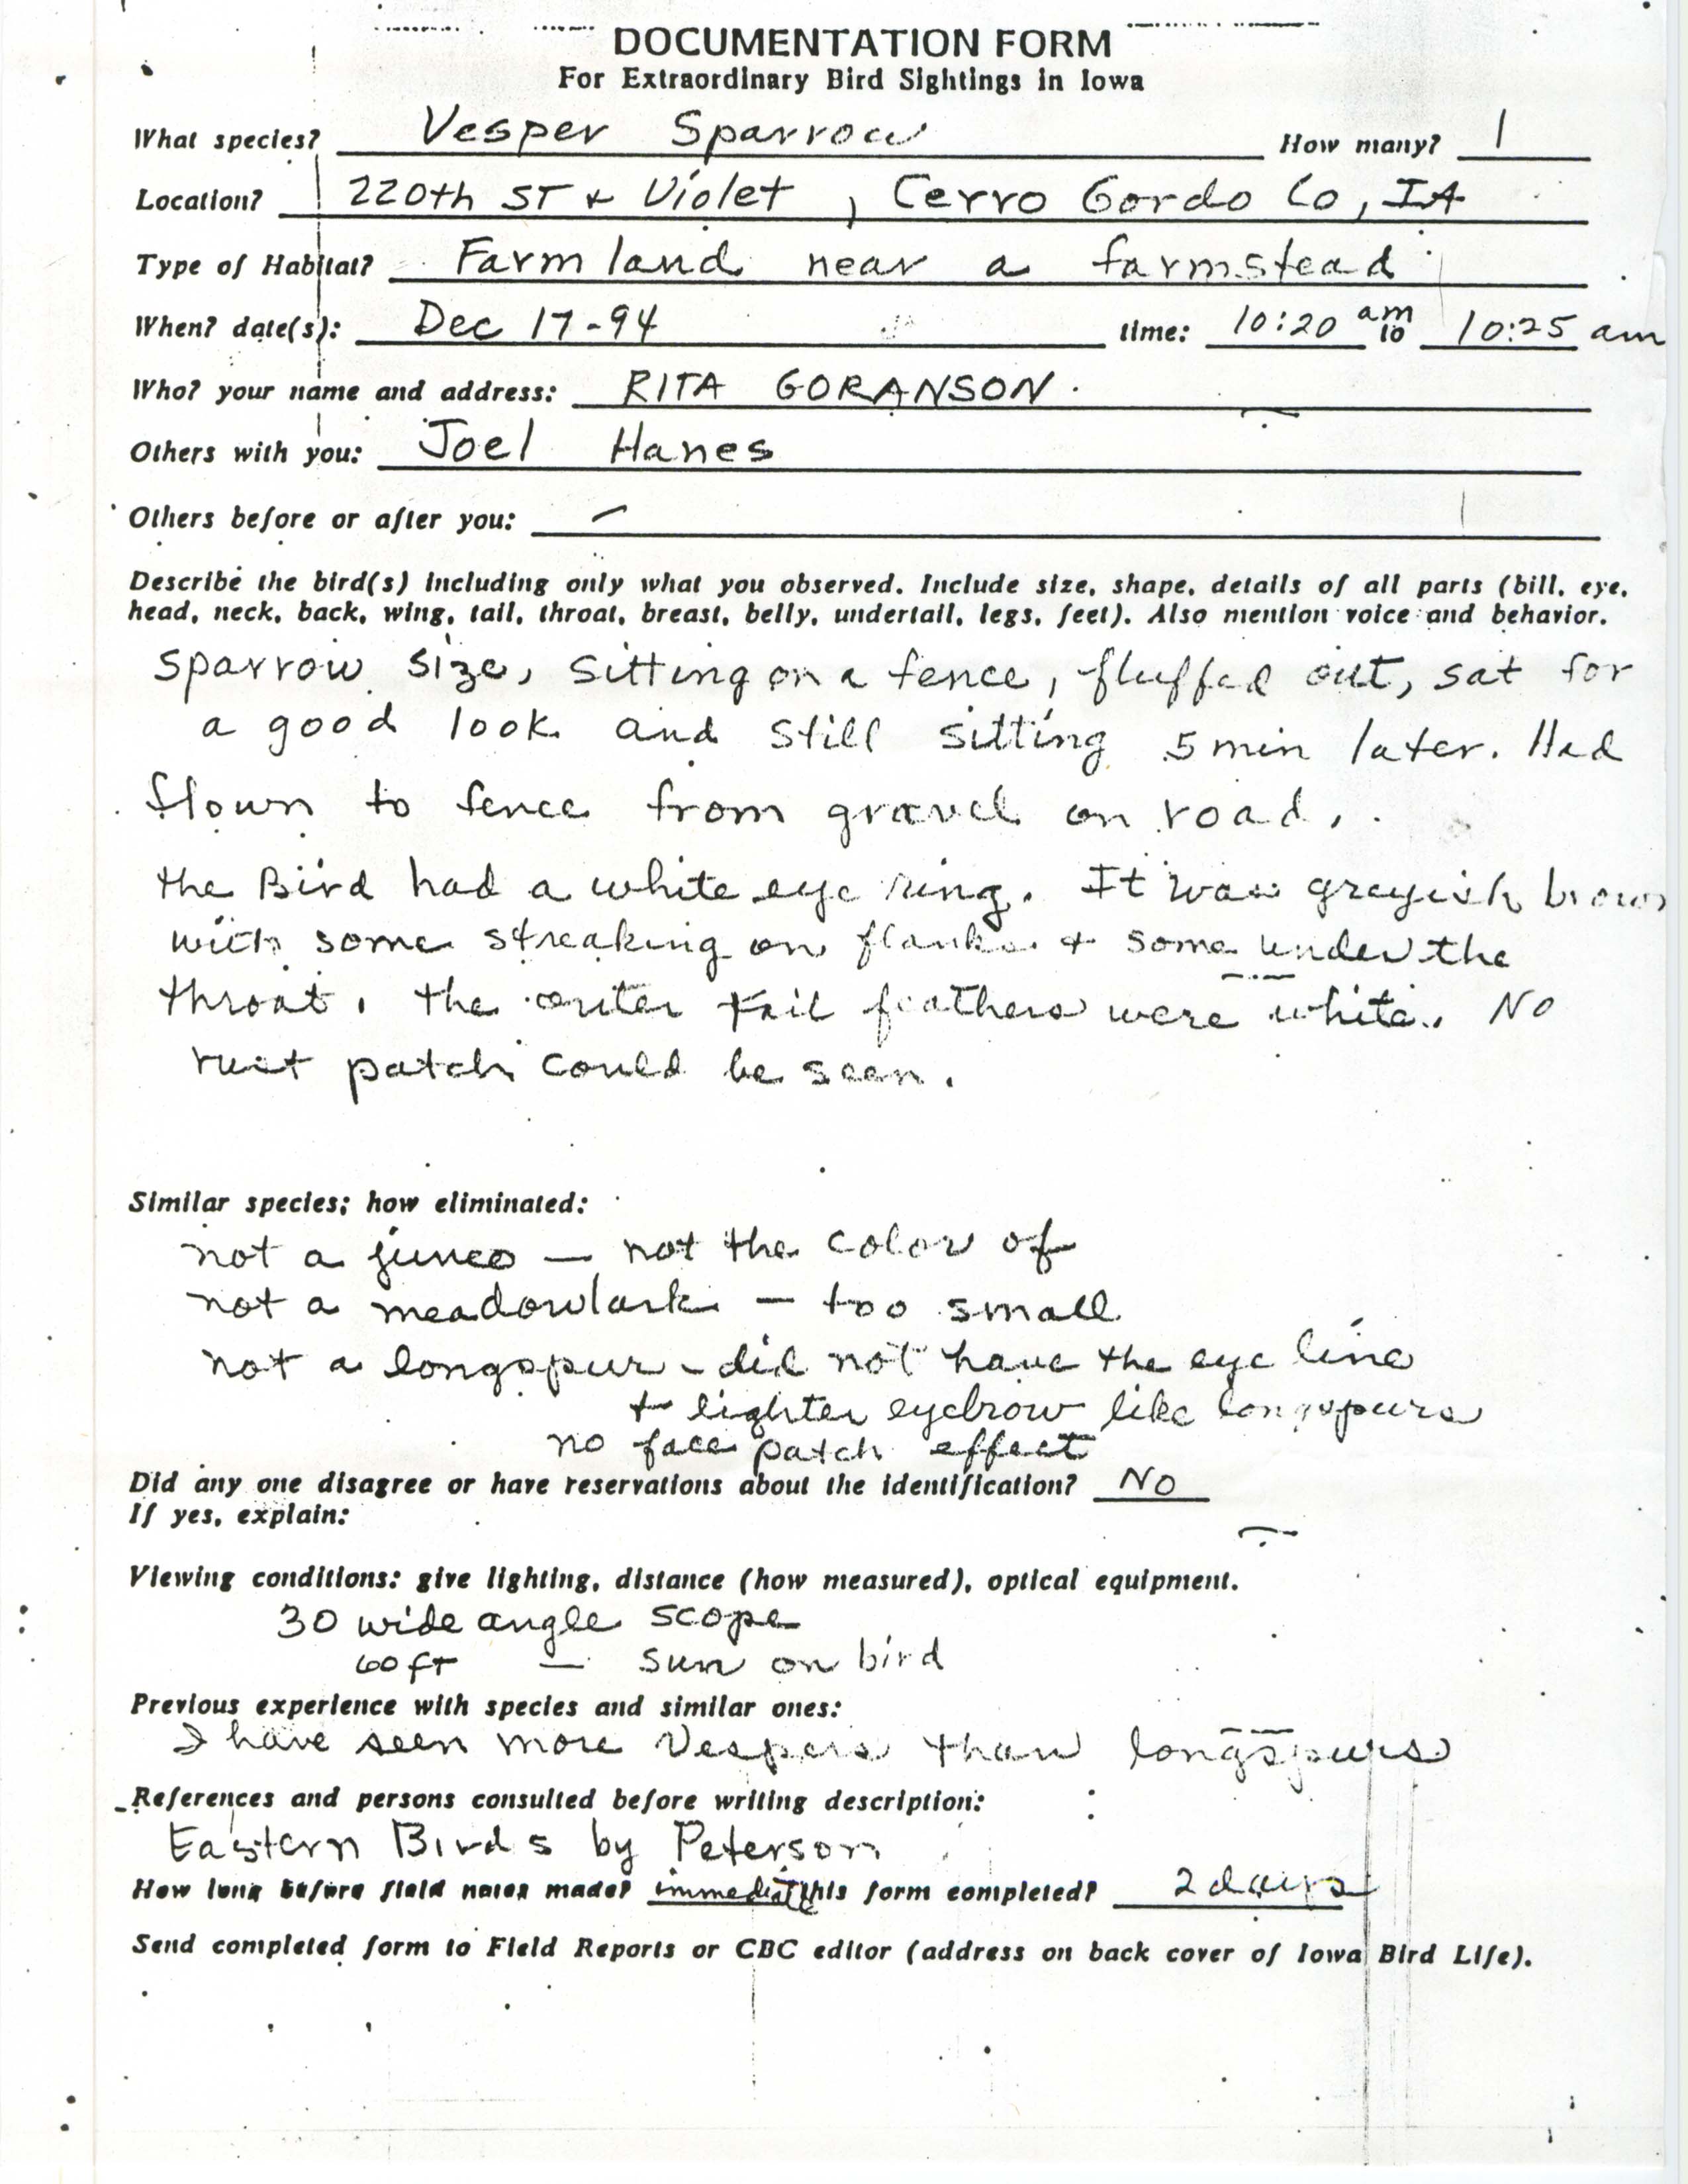 Rare bird documentation form for Vesper Sparrow in Cerro Gordo County, 1994